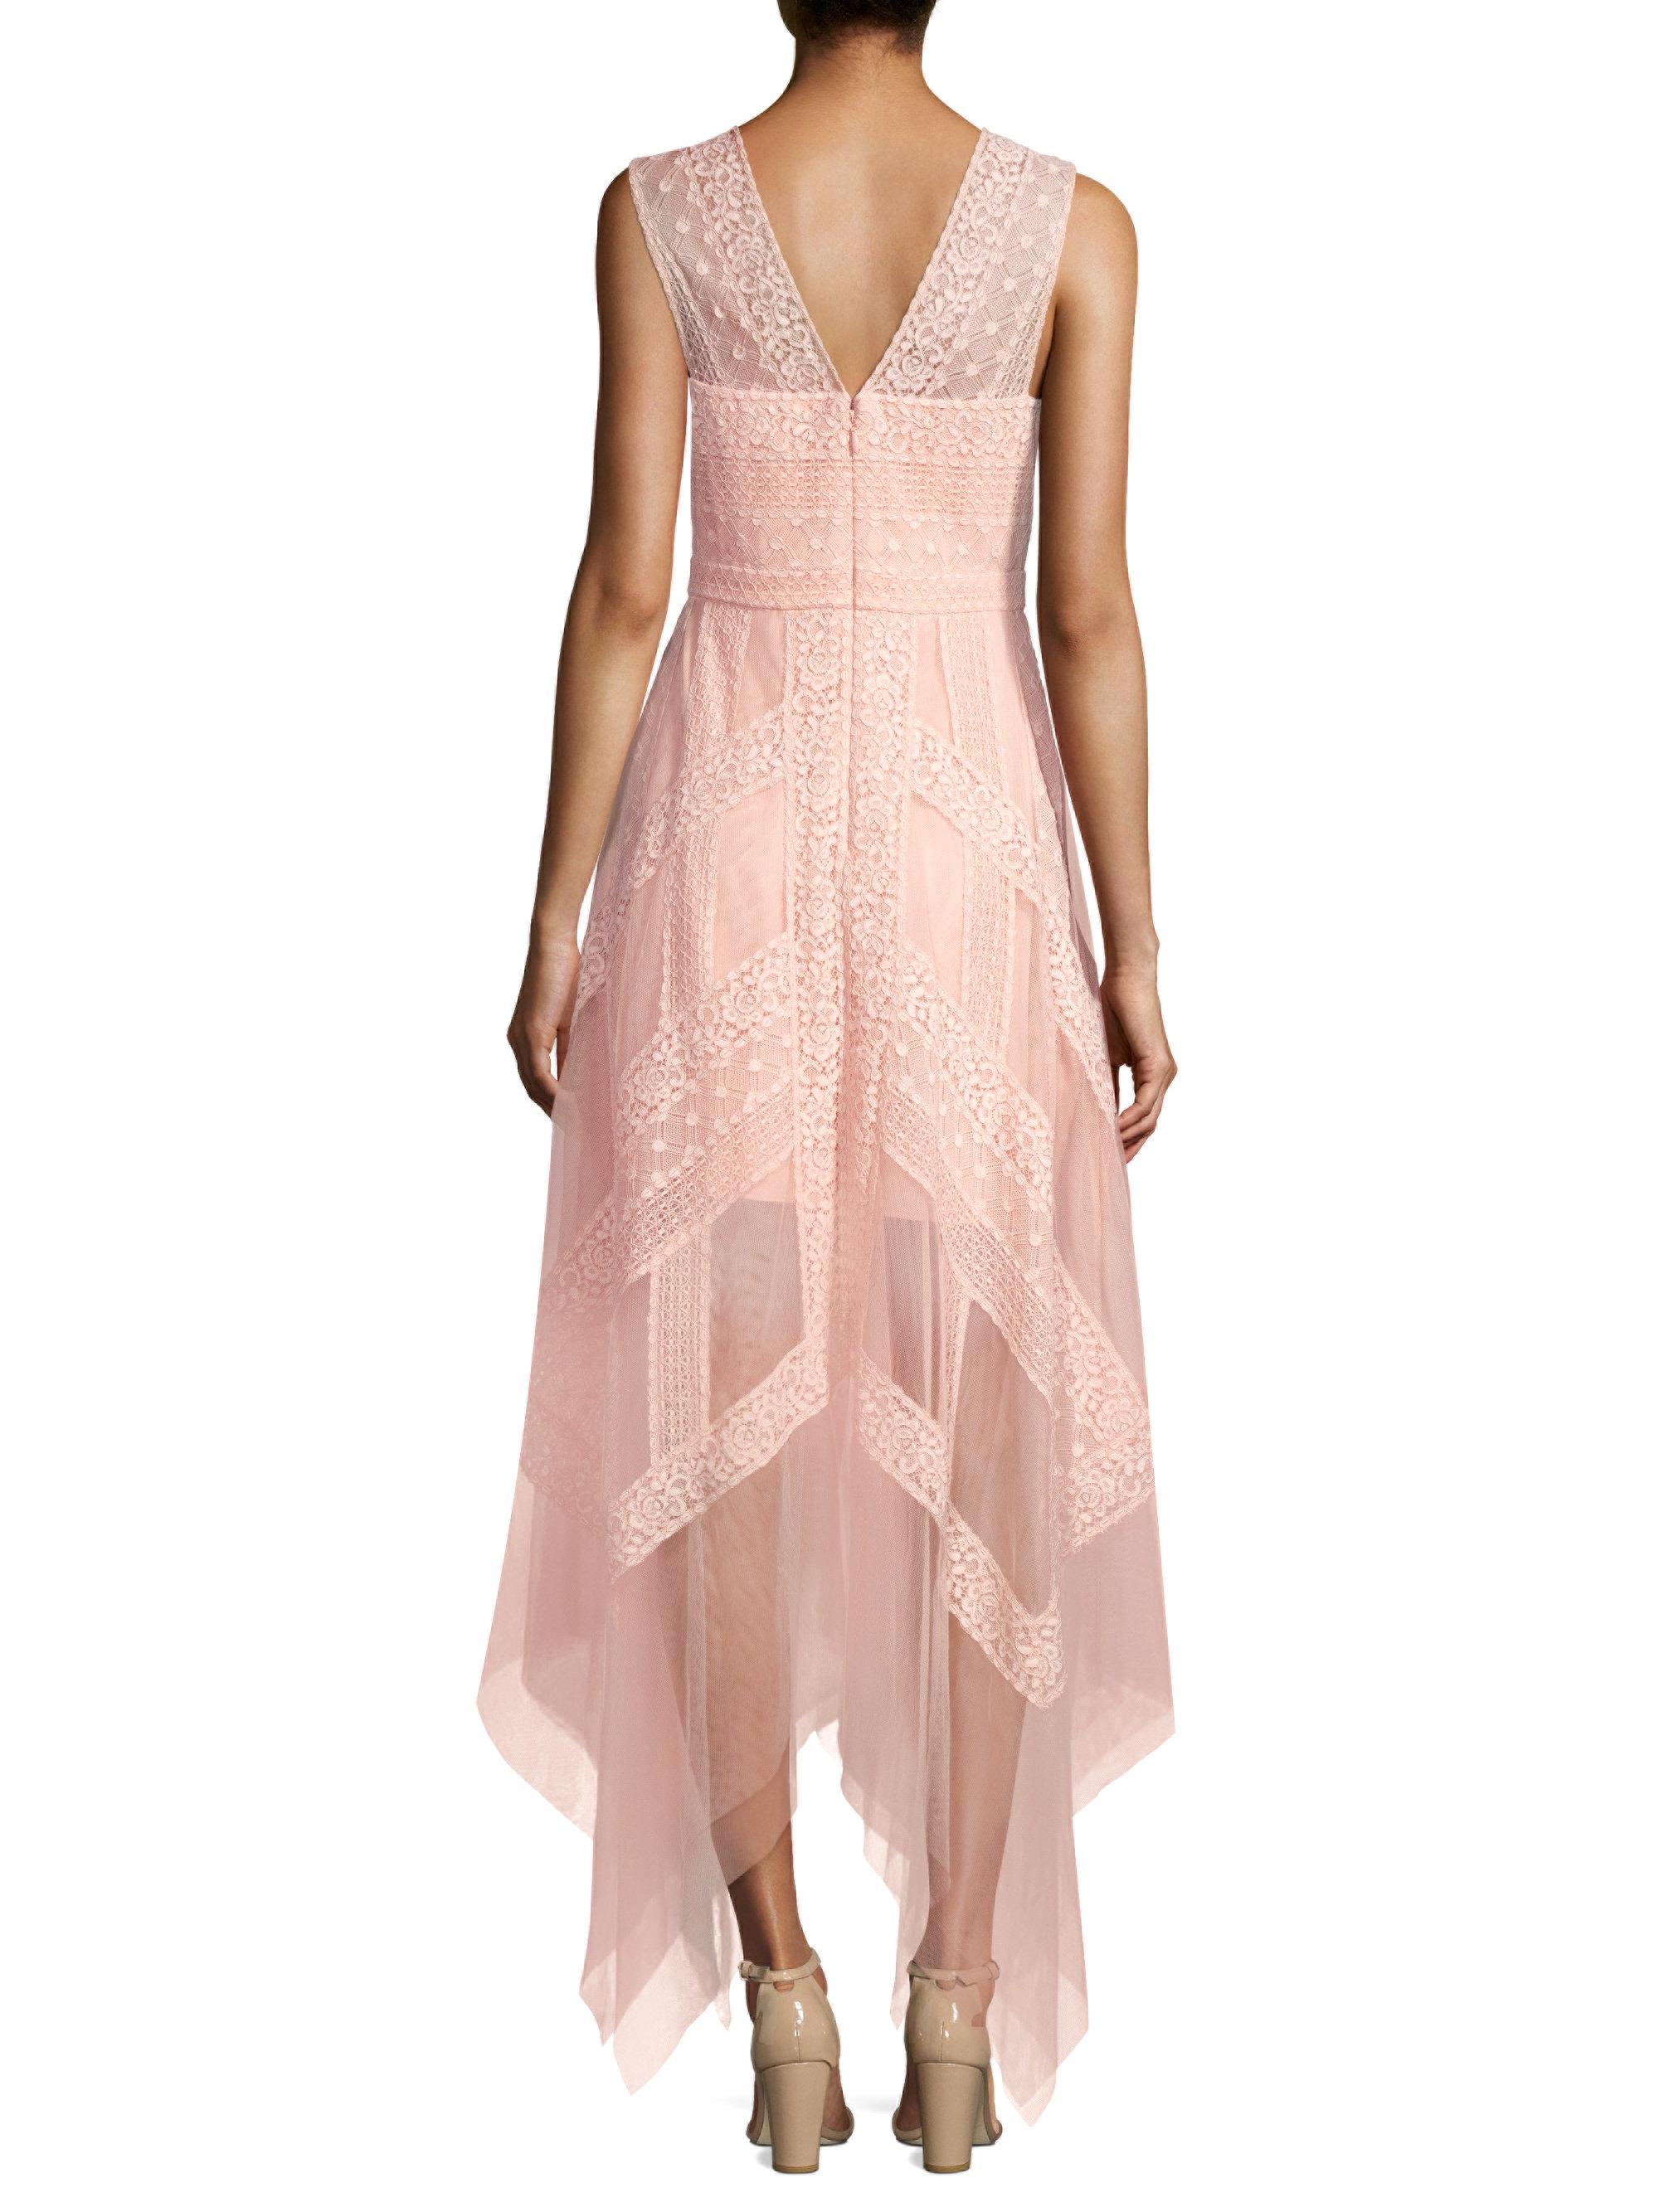 Lyst - Bcbgmaxazria Asymmetrical Lace Dress in Pink